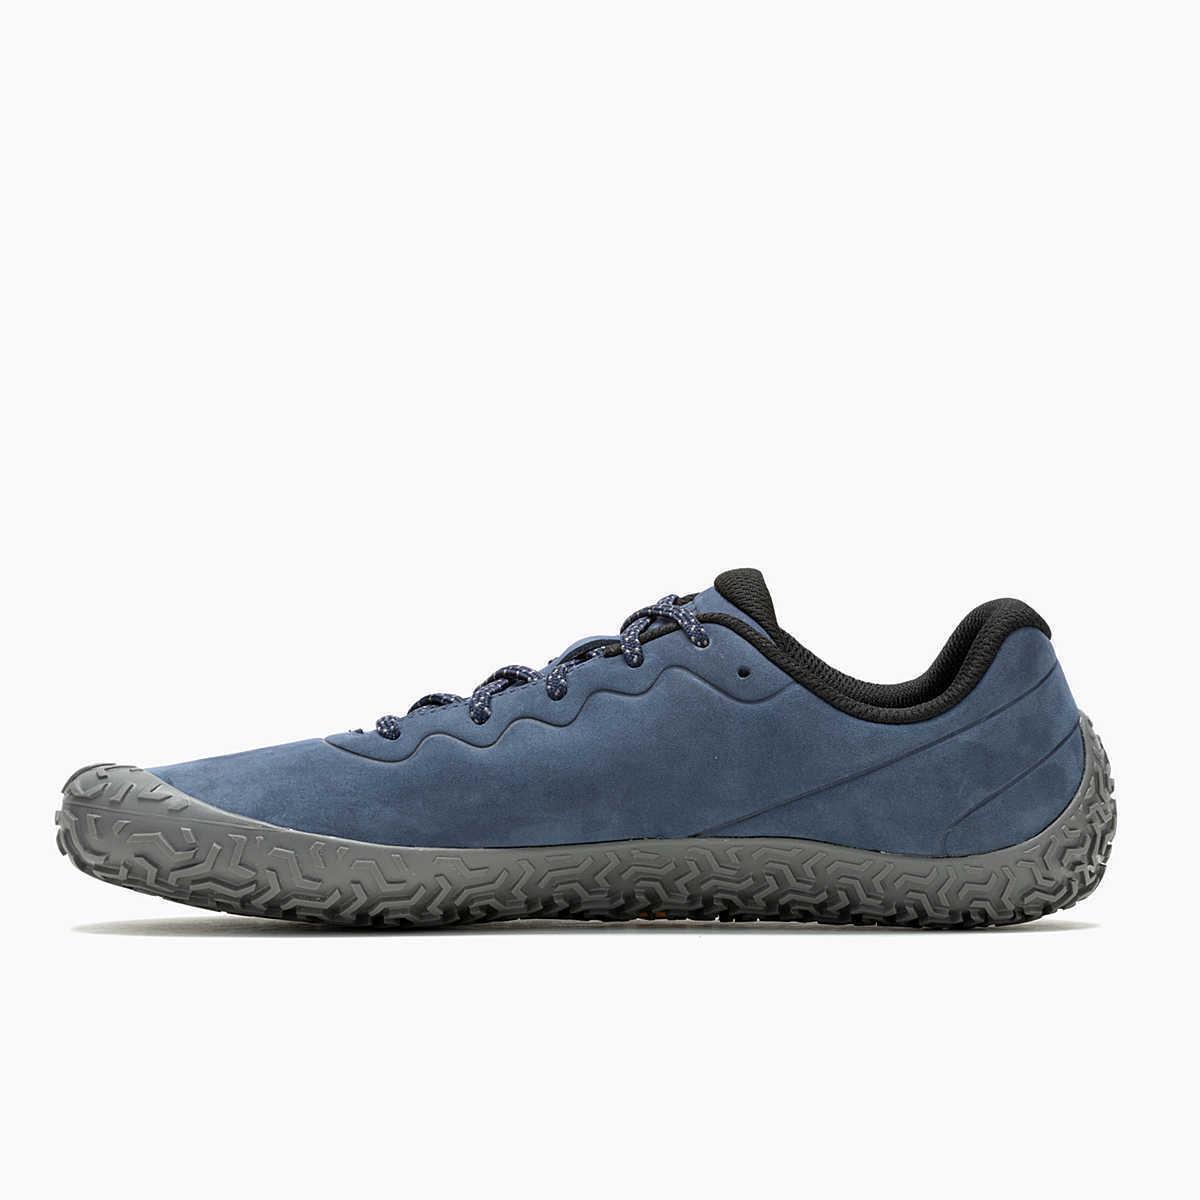 Mens Merrell Vapor Glove 6 Sea Leather Trail Running Shoes - Blue